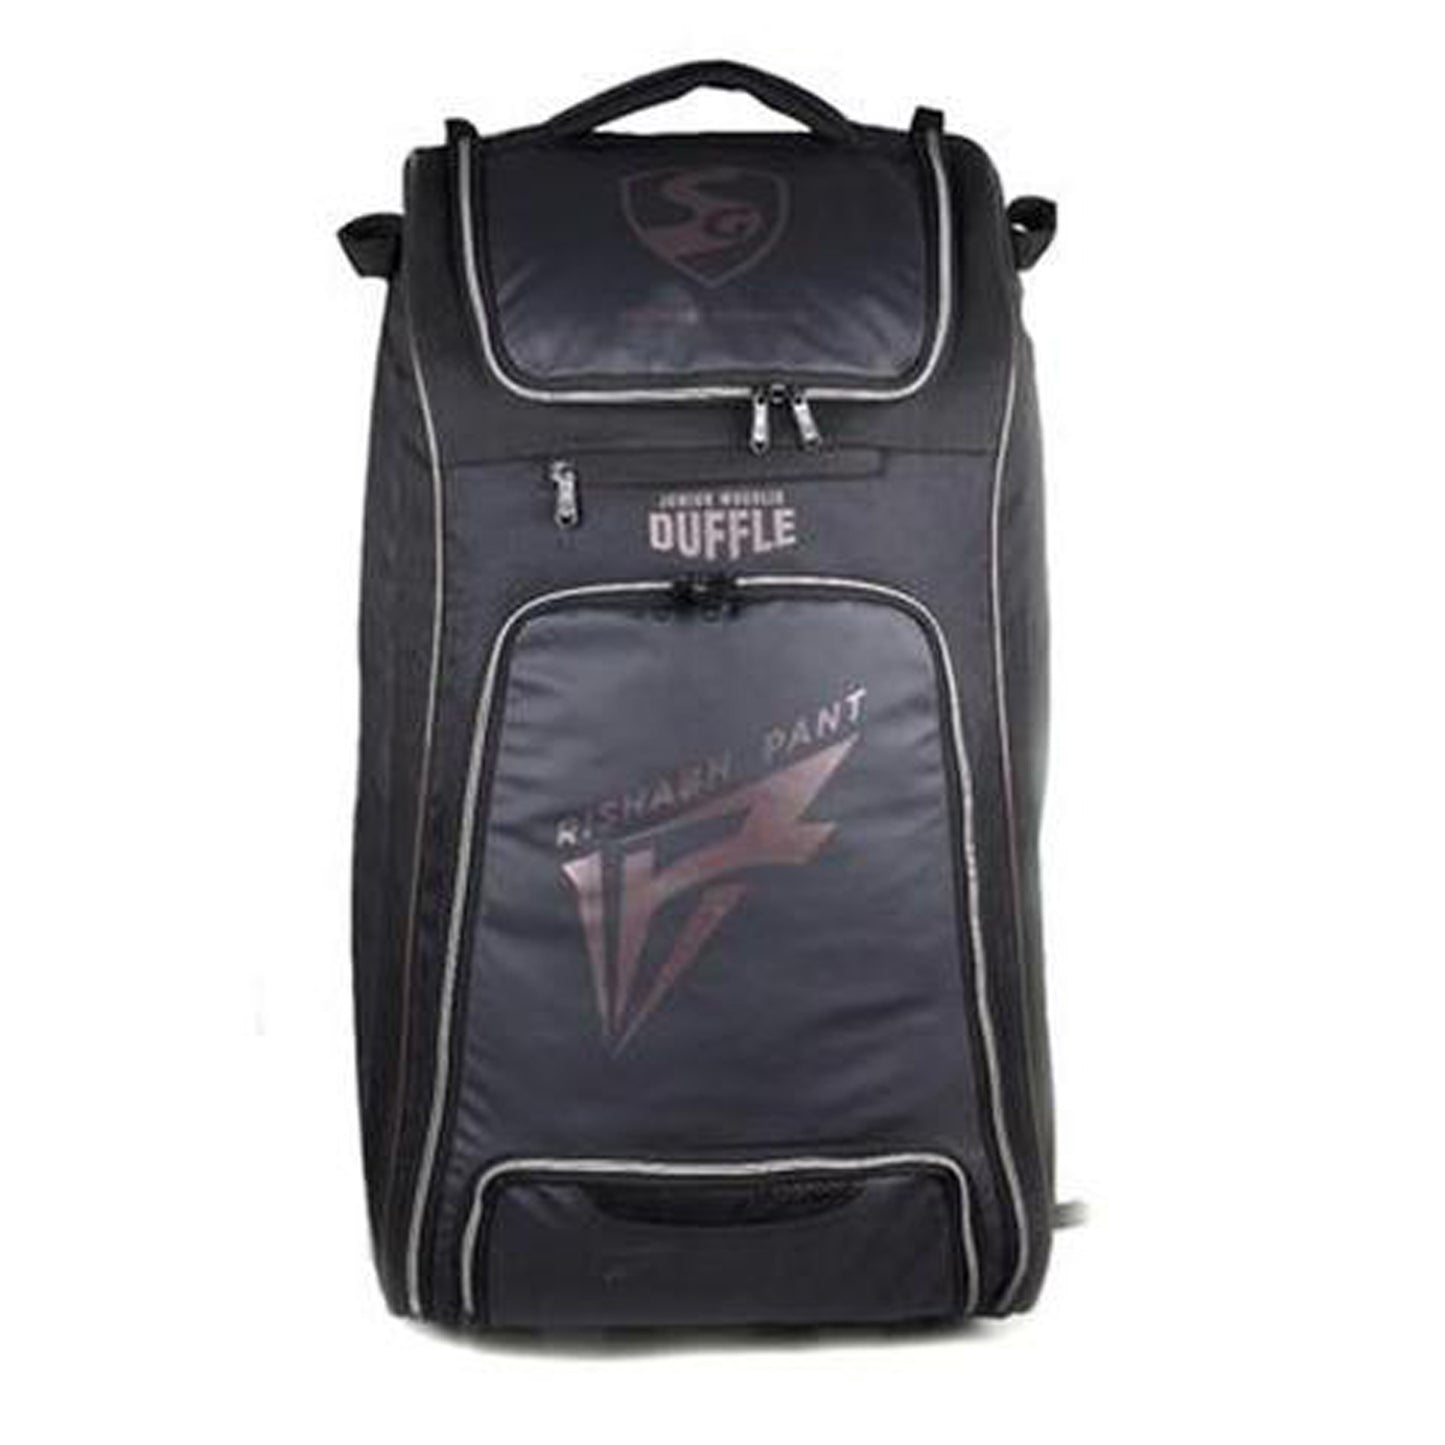 SG Duffle RP Junior Trolley Large Kit Bag - Best Price online Prokicksports.com